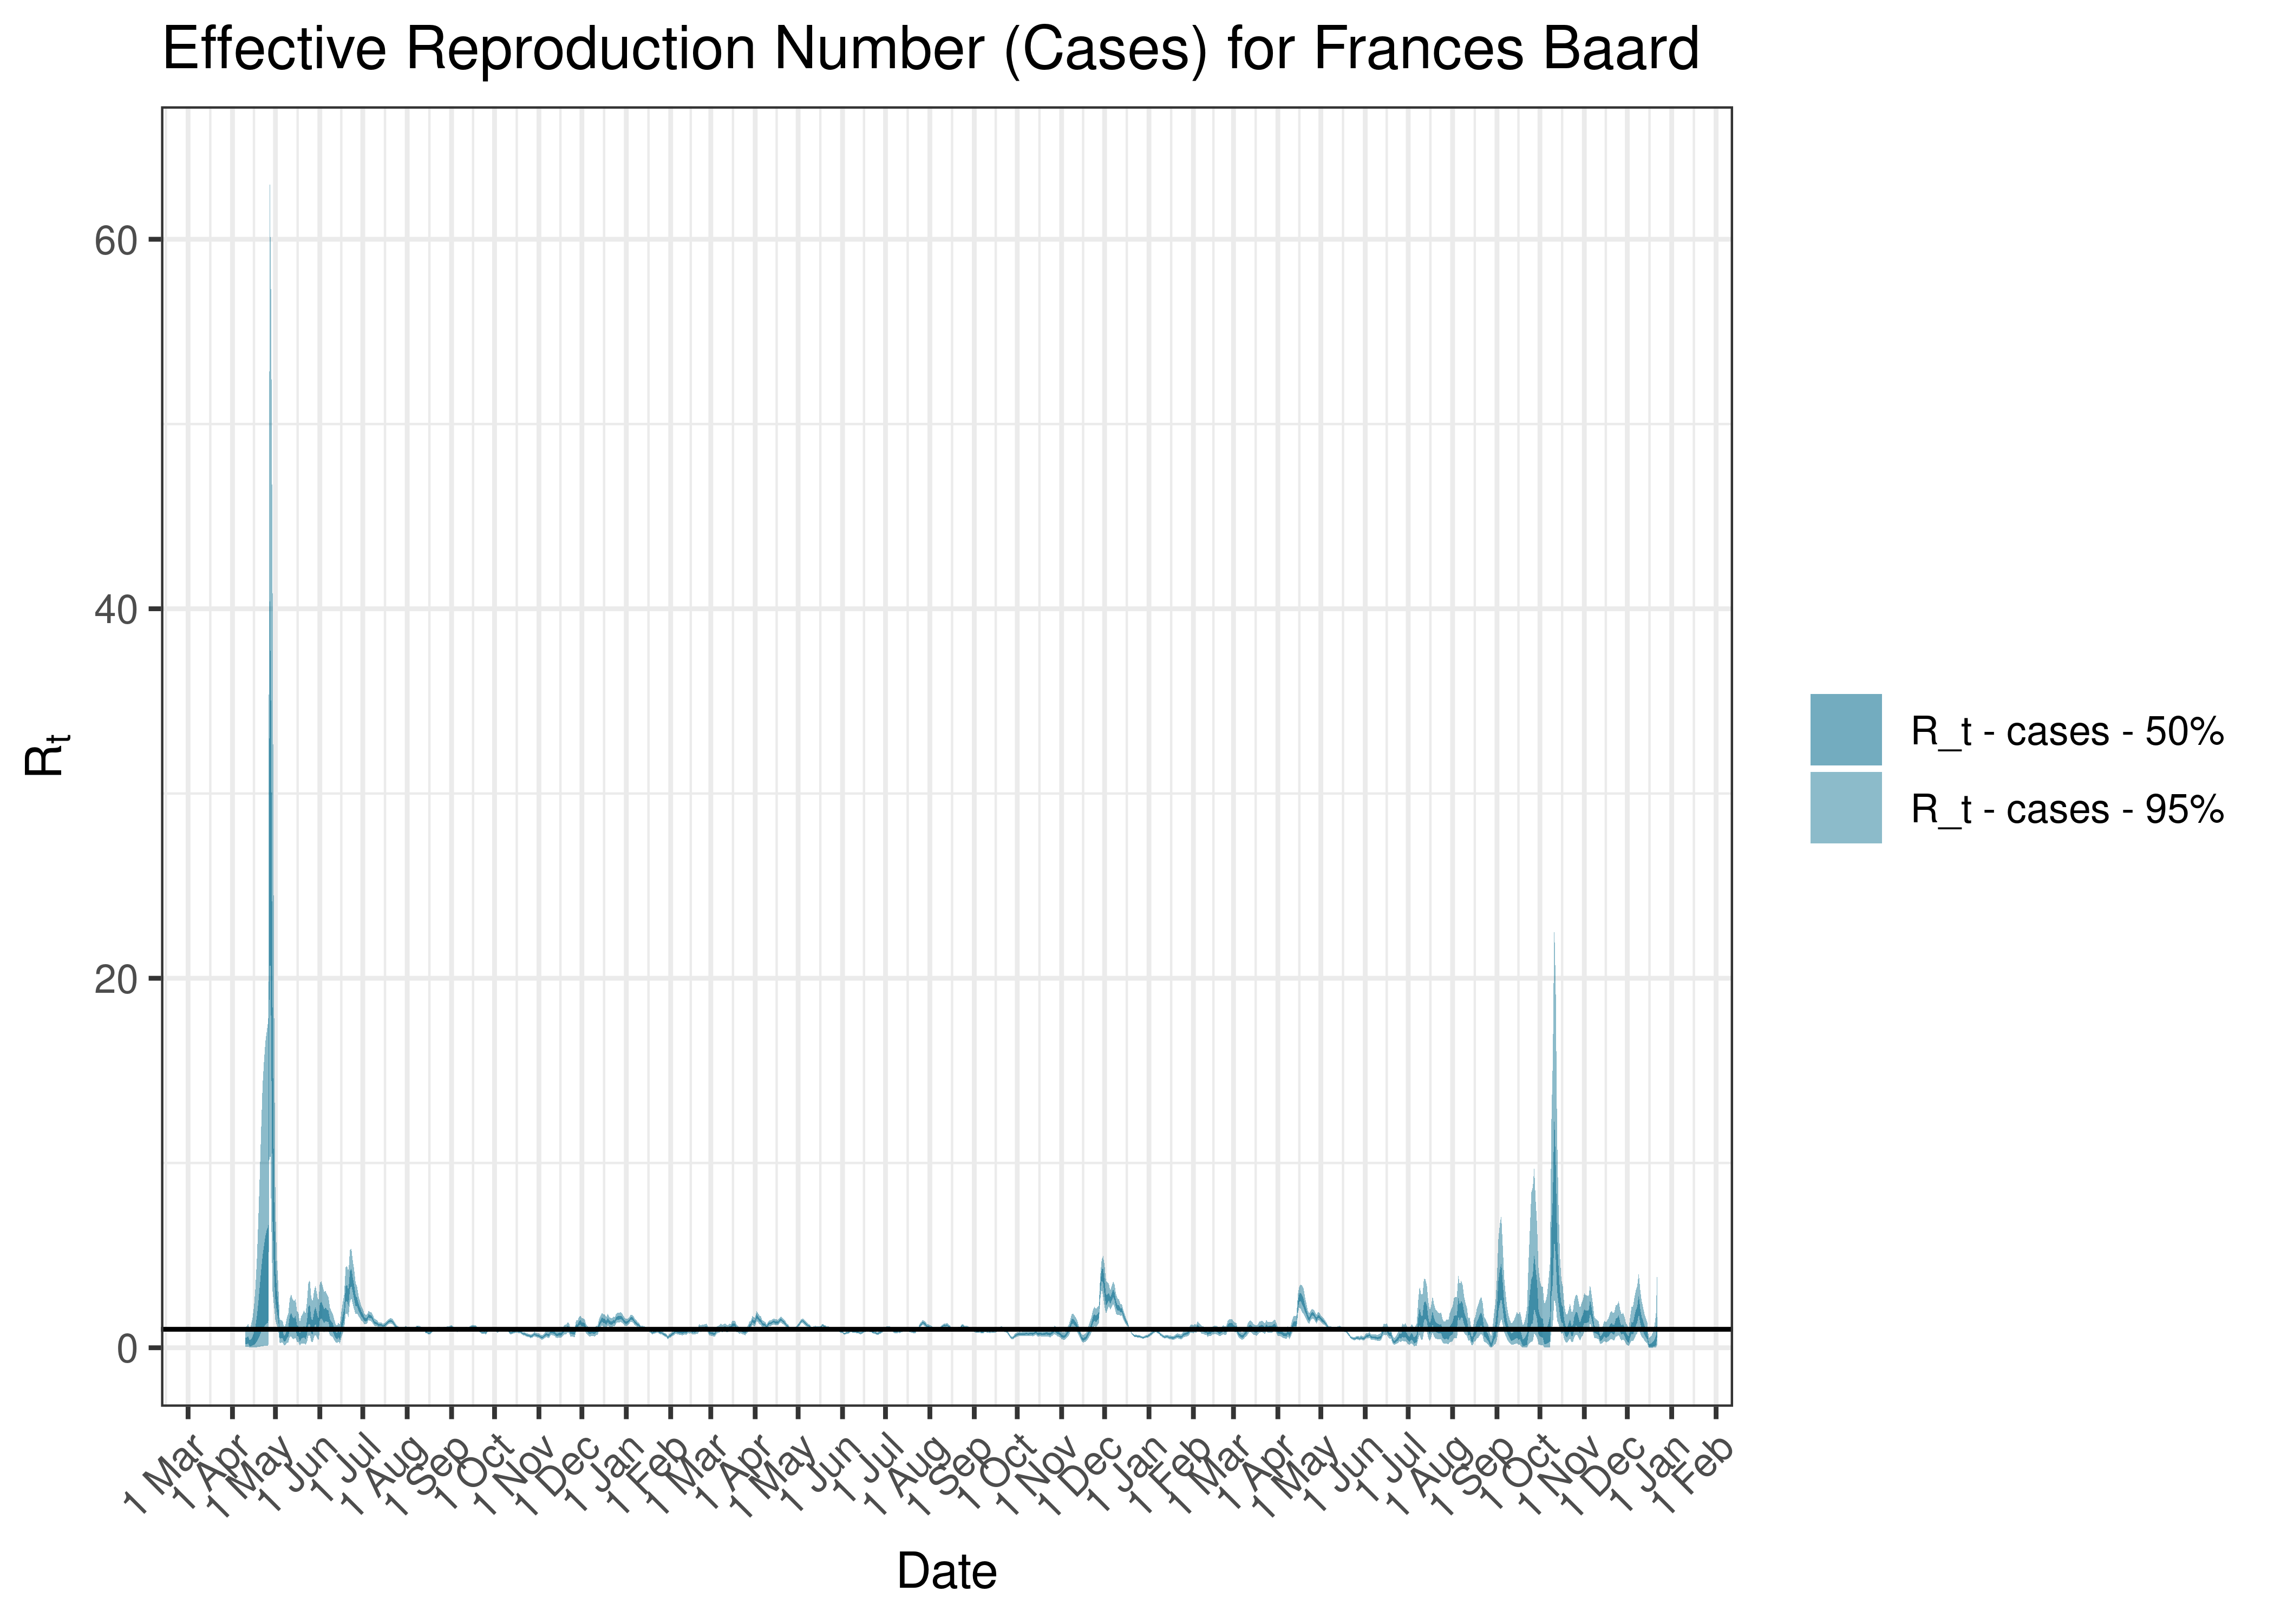 Estimated Effective Reproduction Number Based on Cases for Frances Baard since 1 April 2020